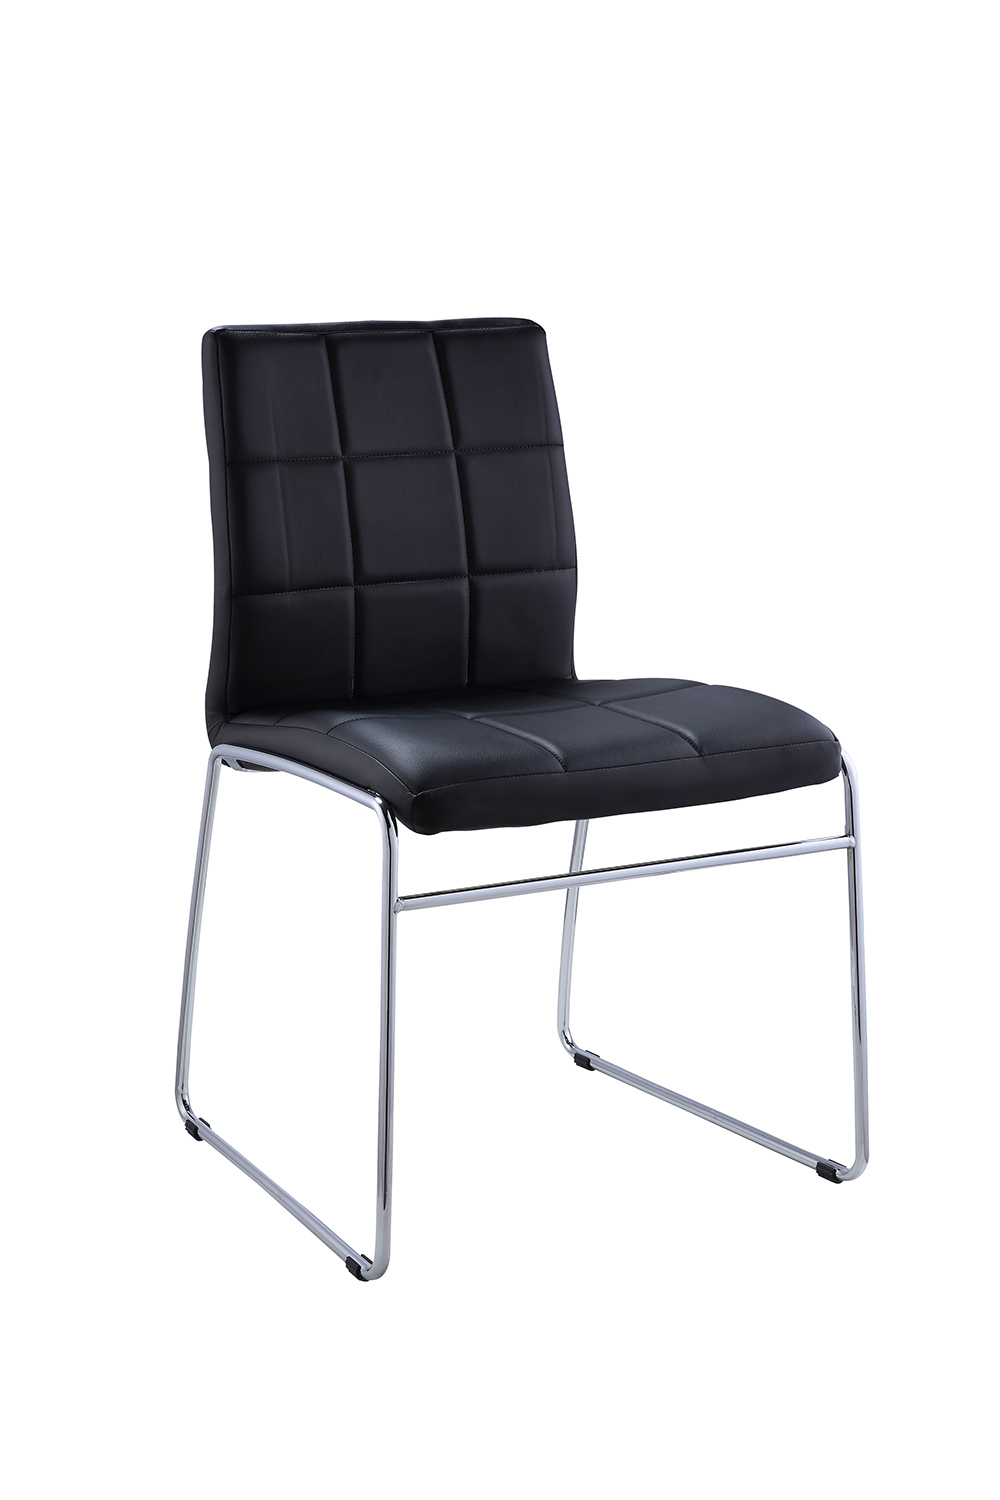 Acme Gordie Sled Metal Shape Side Chair - Black Vinyl/Chrome